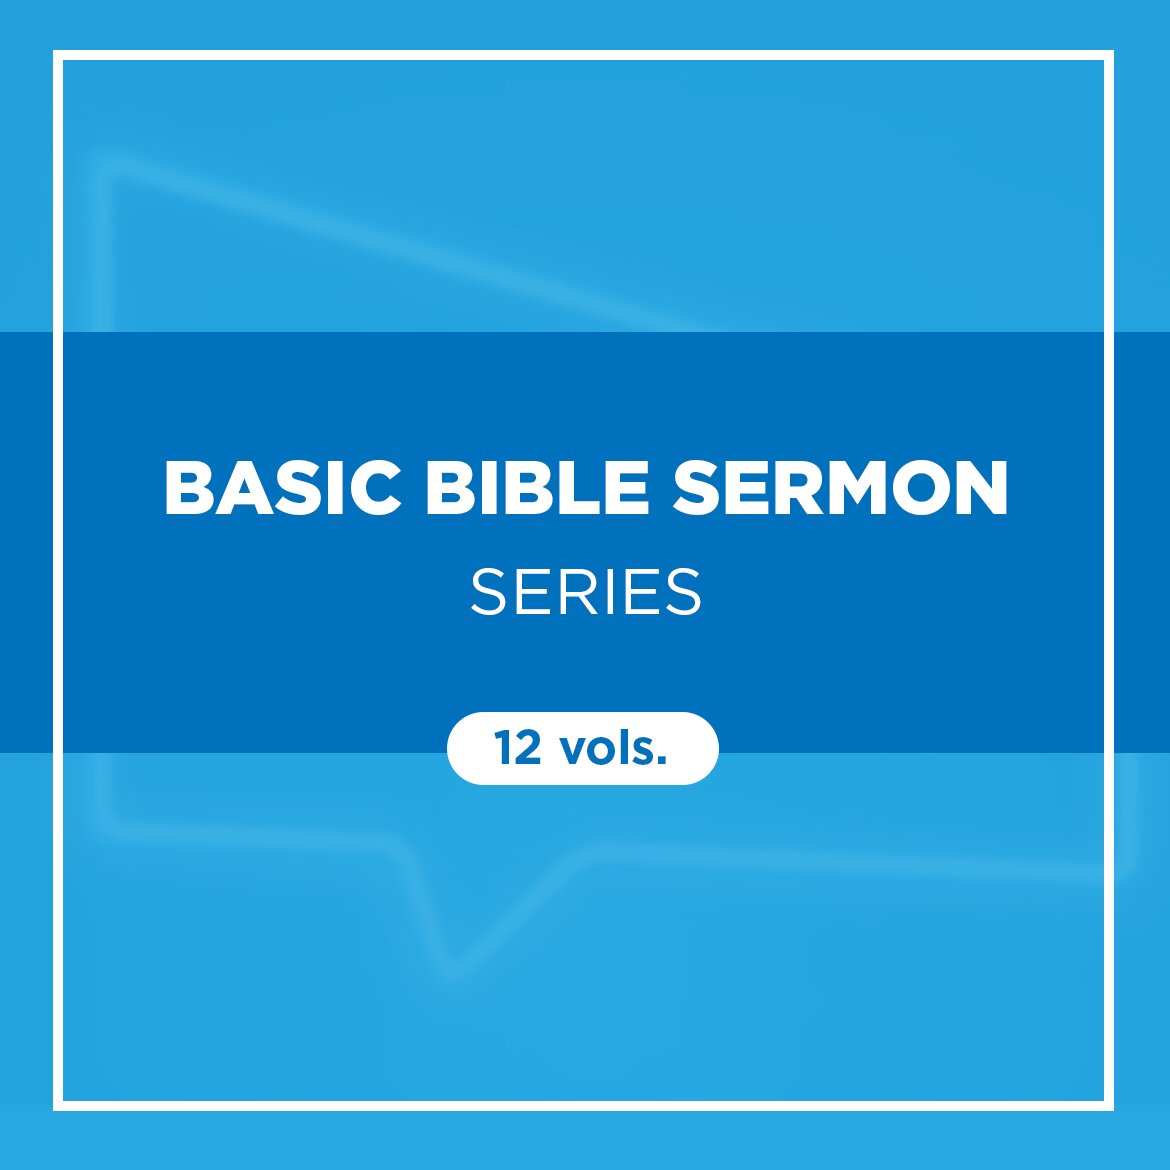 Basic Bible Sermon Series (12 vols.) | Logos Bible Software